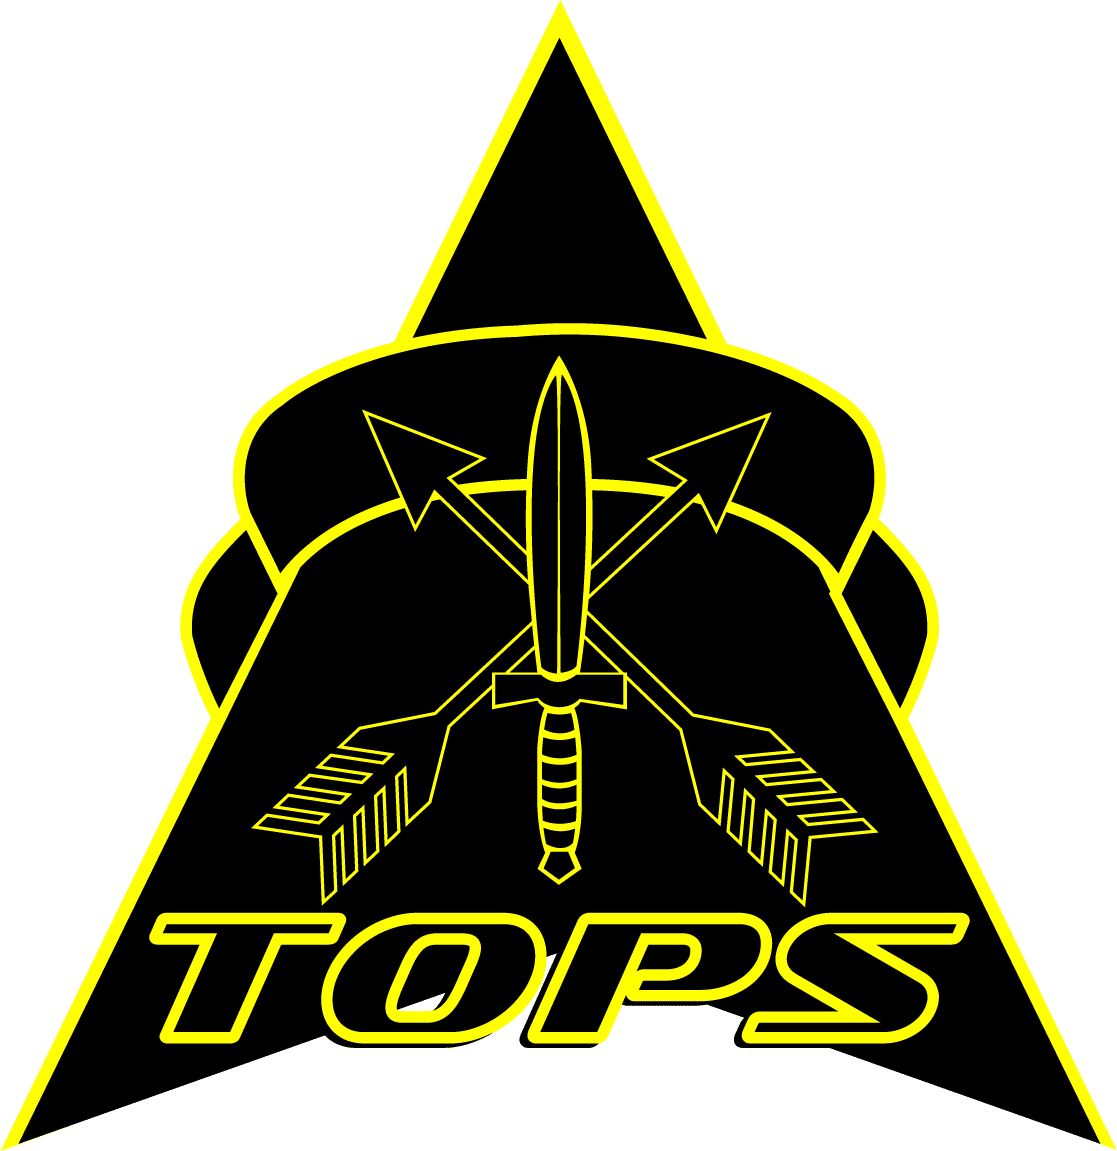 TOPS logo